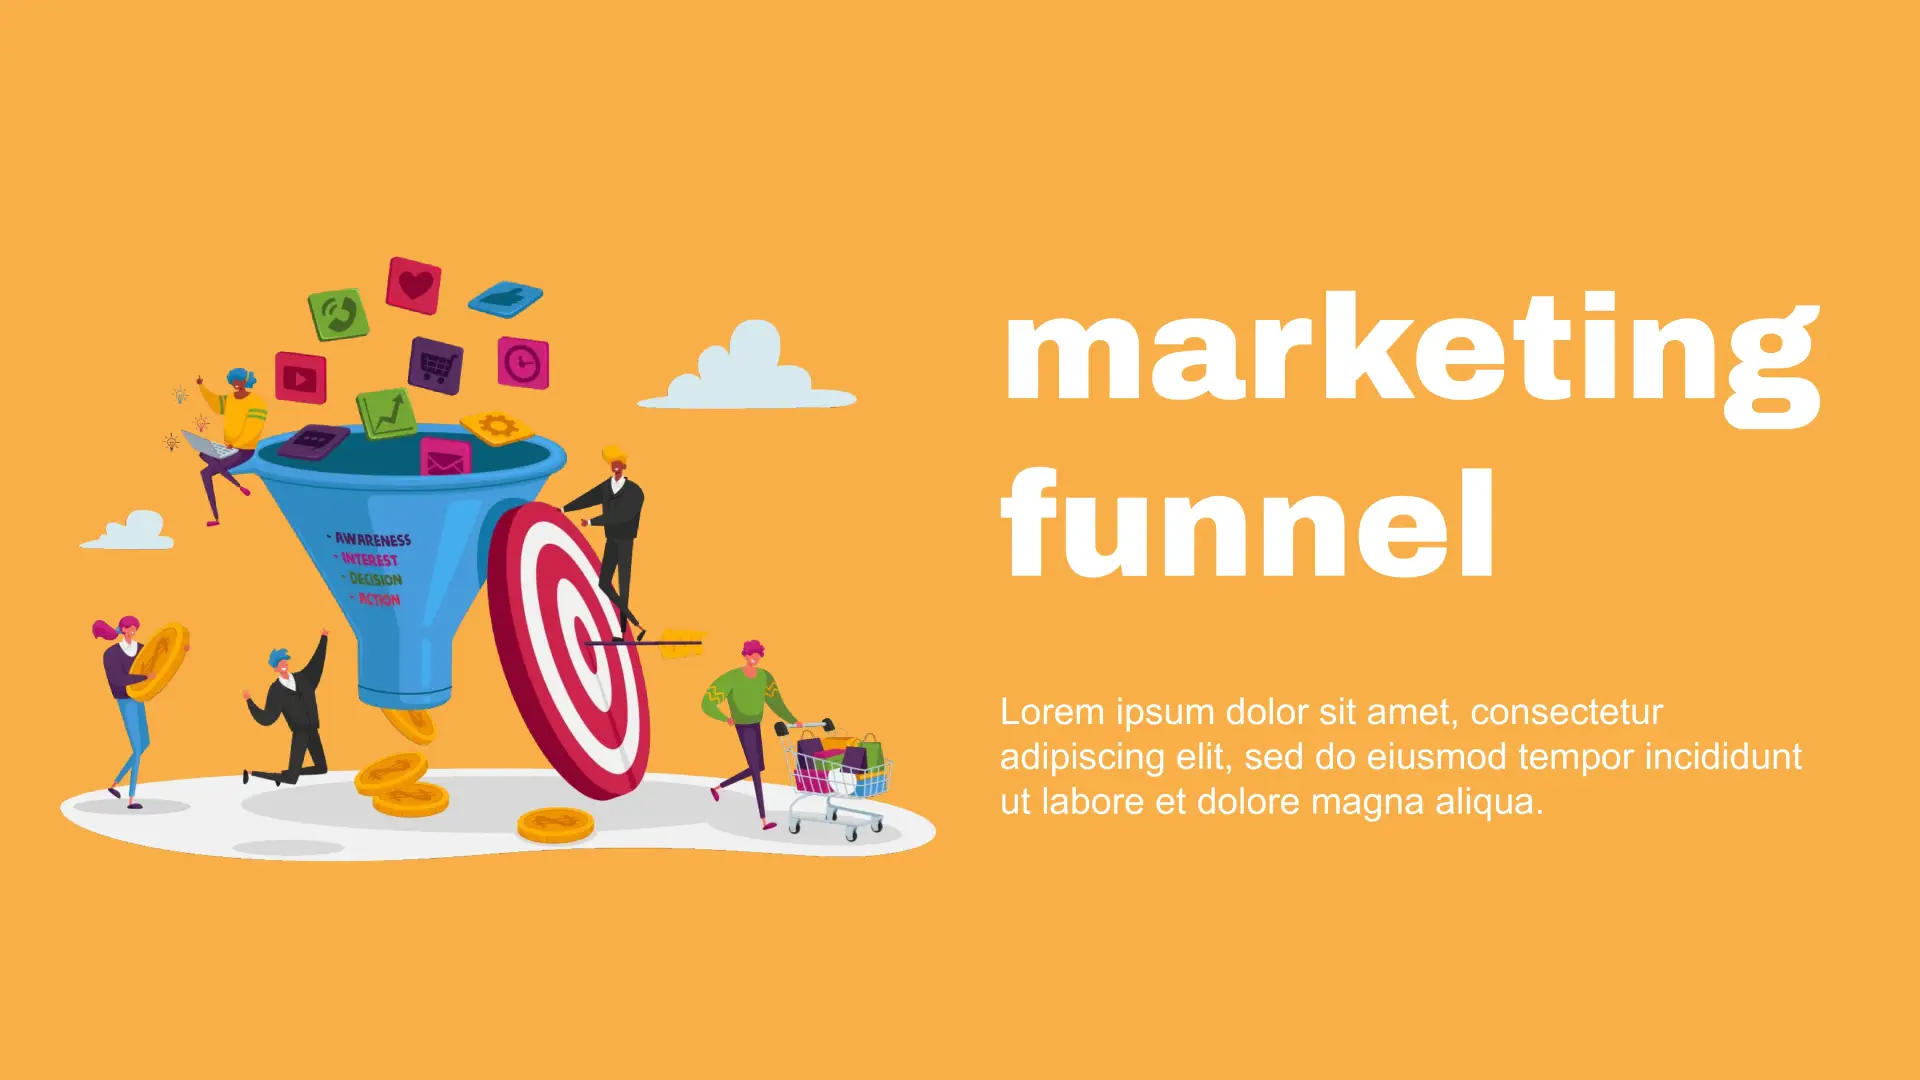 Marketing Funnel Template for Google Slides